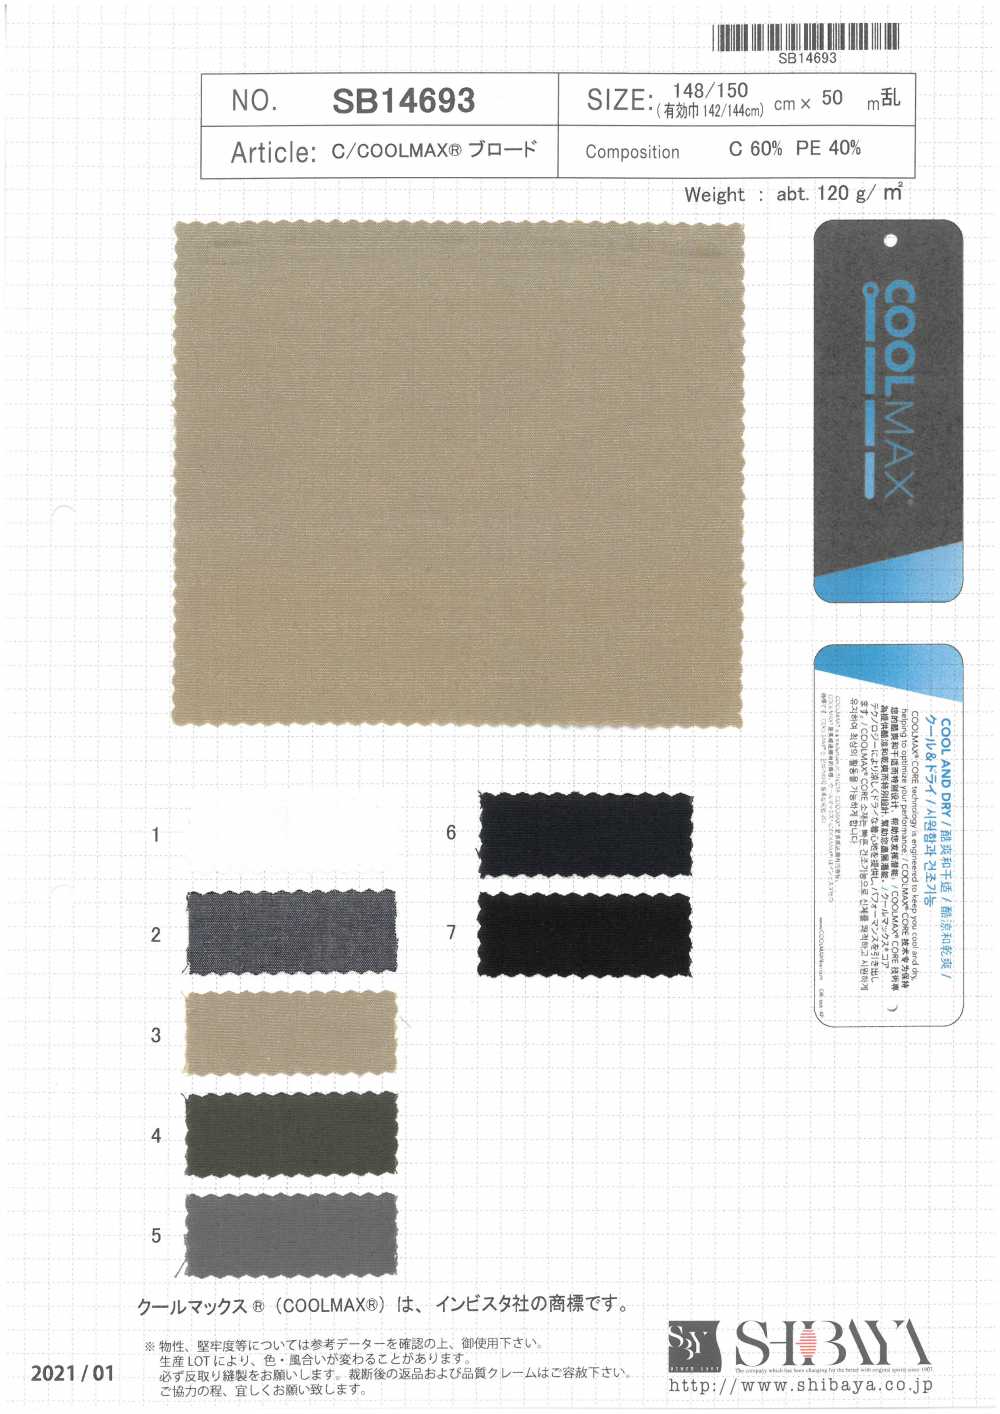 SB14693 C / COOLMAX Broadcloth[Têxtil / Tecido] SHIBAYA